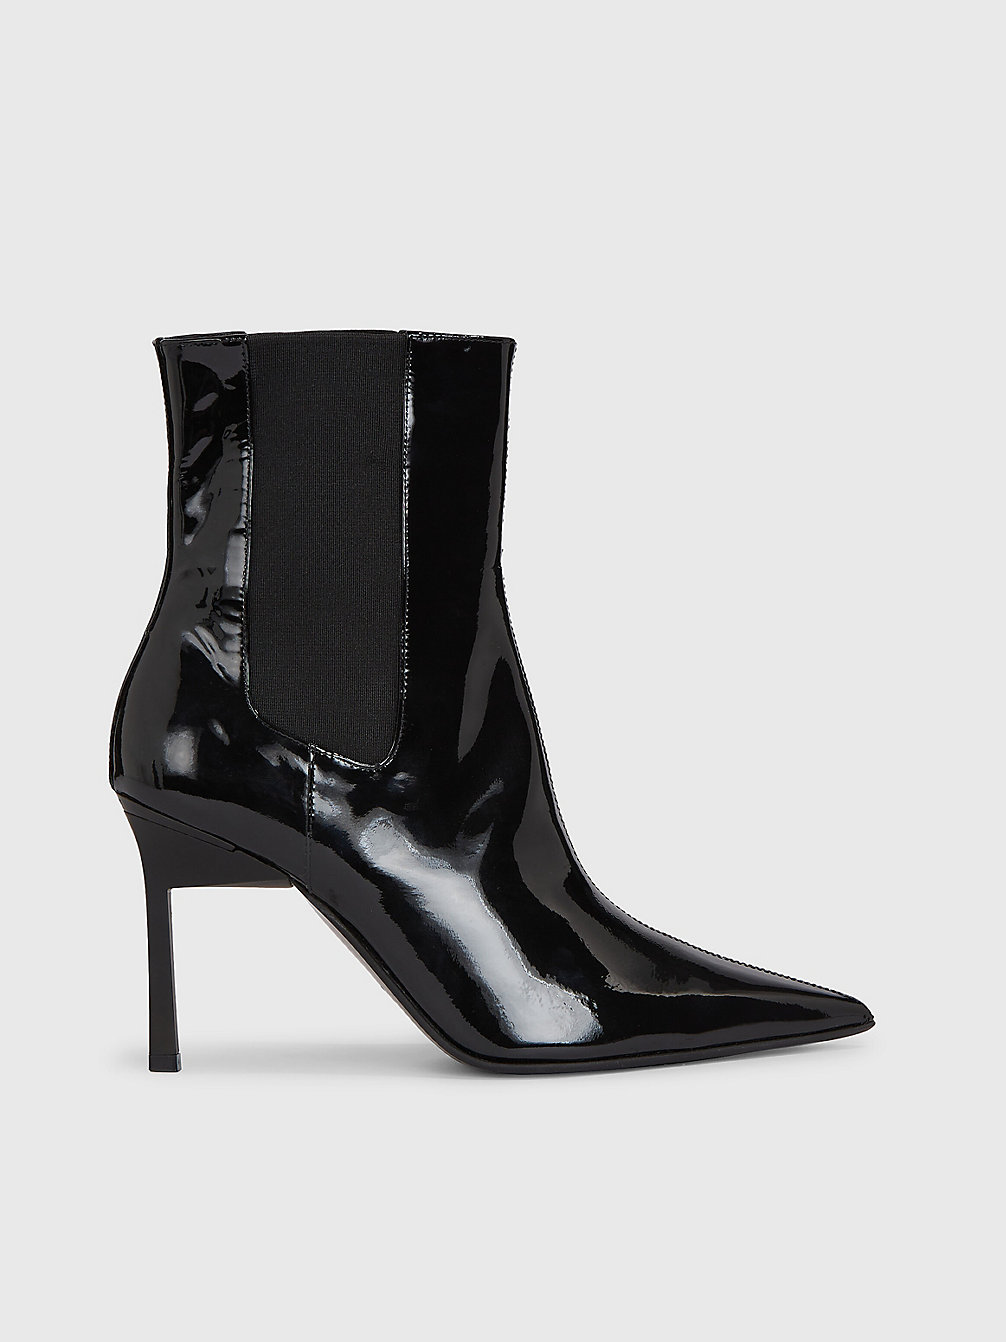 CK BLACK Patent Leather Stiletto Chelsea Boots undefined women Calvin Klein